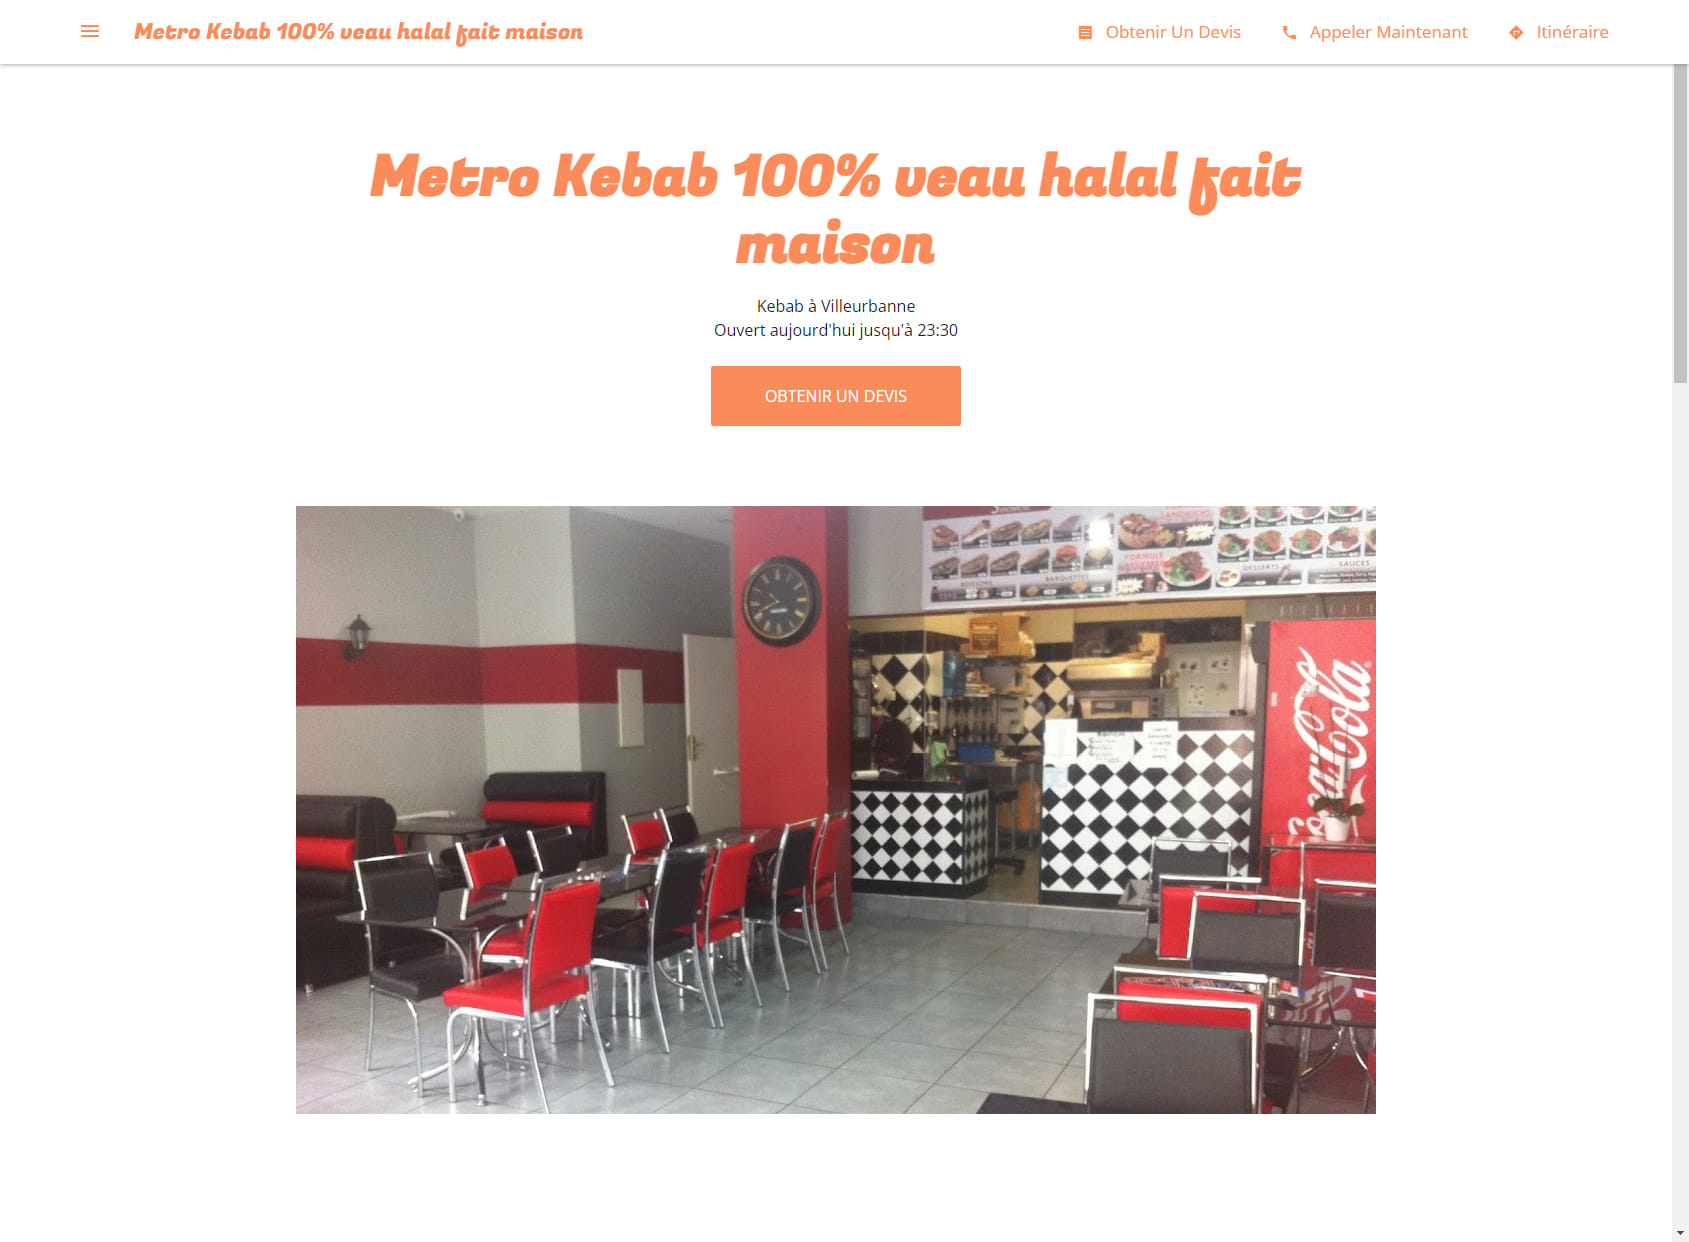 Metro Kebab 100% veau halal fait maison